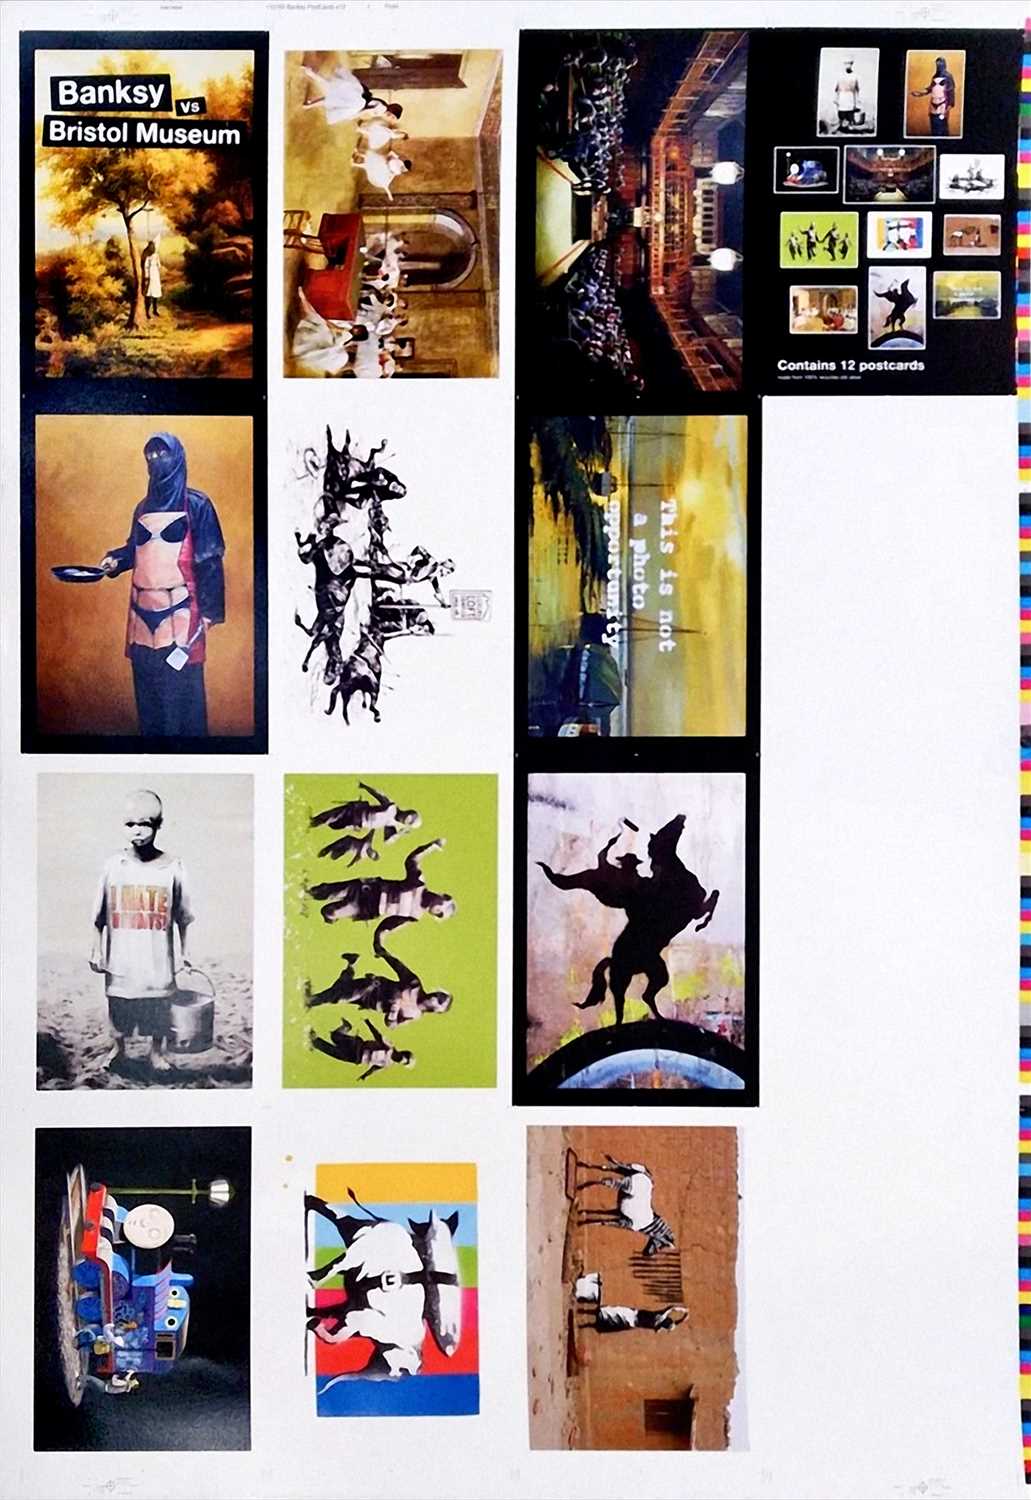 Lot 72 - Banksy (British b.1974), 'Banksy vs Bristol Museum Registration Sheet', 2009, unique